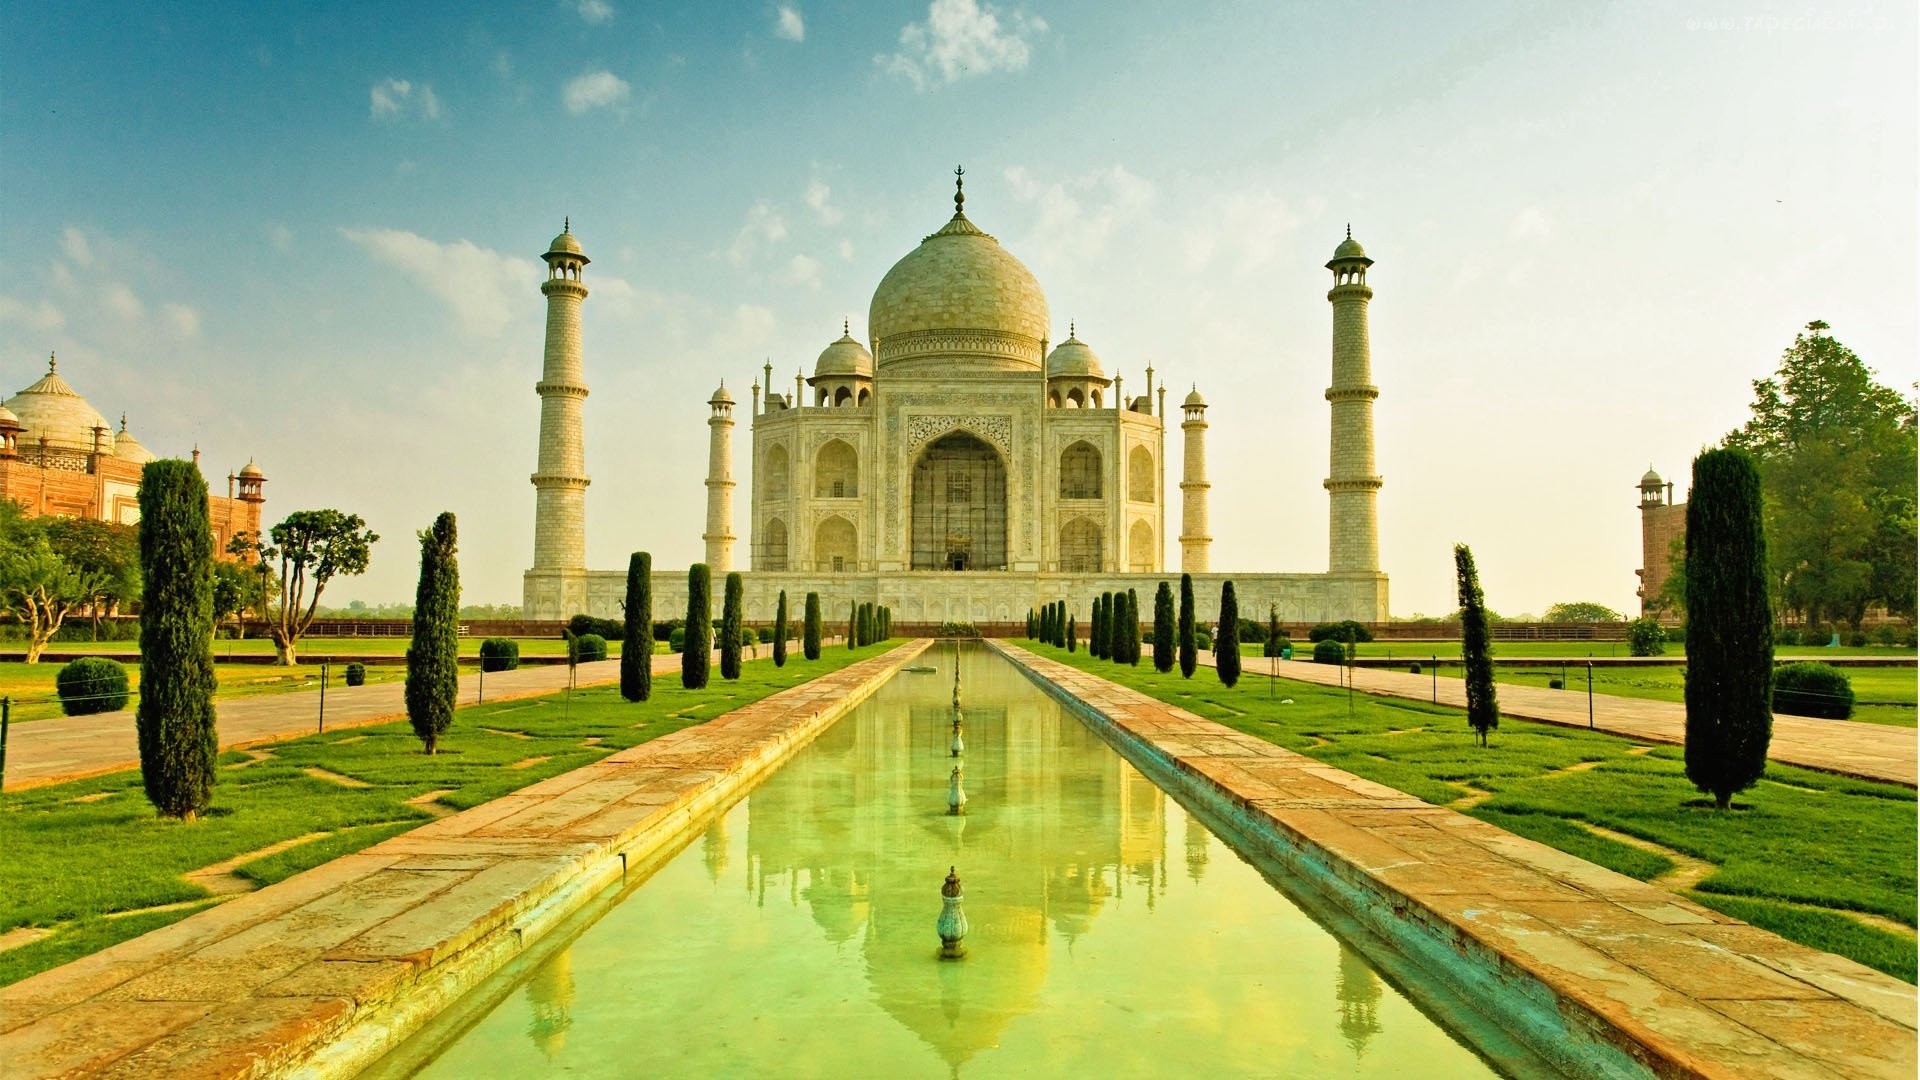 Популярные заставки и фоны Тадж Махал (Taj Mahal) на компьютер